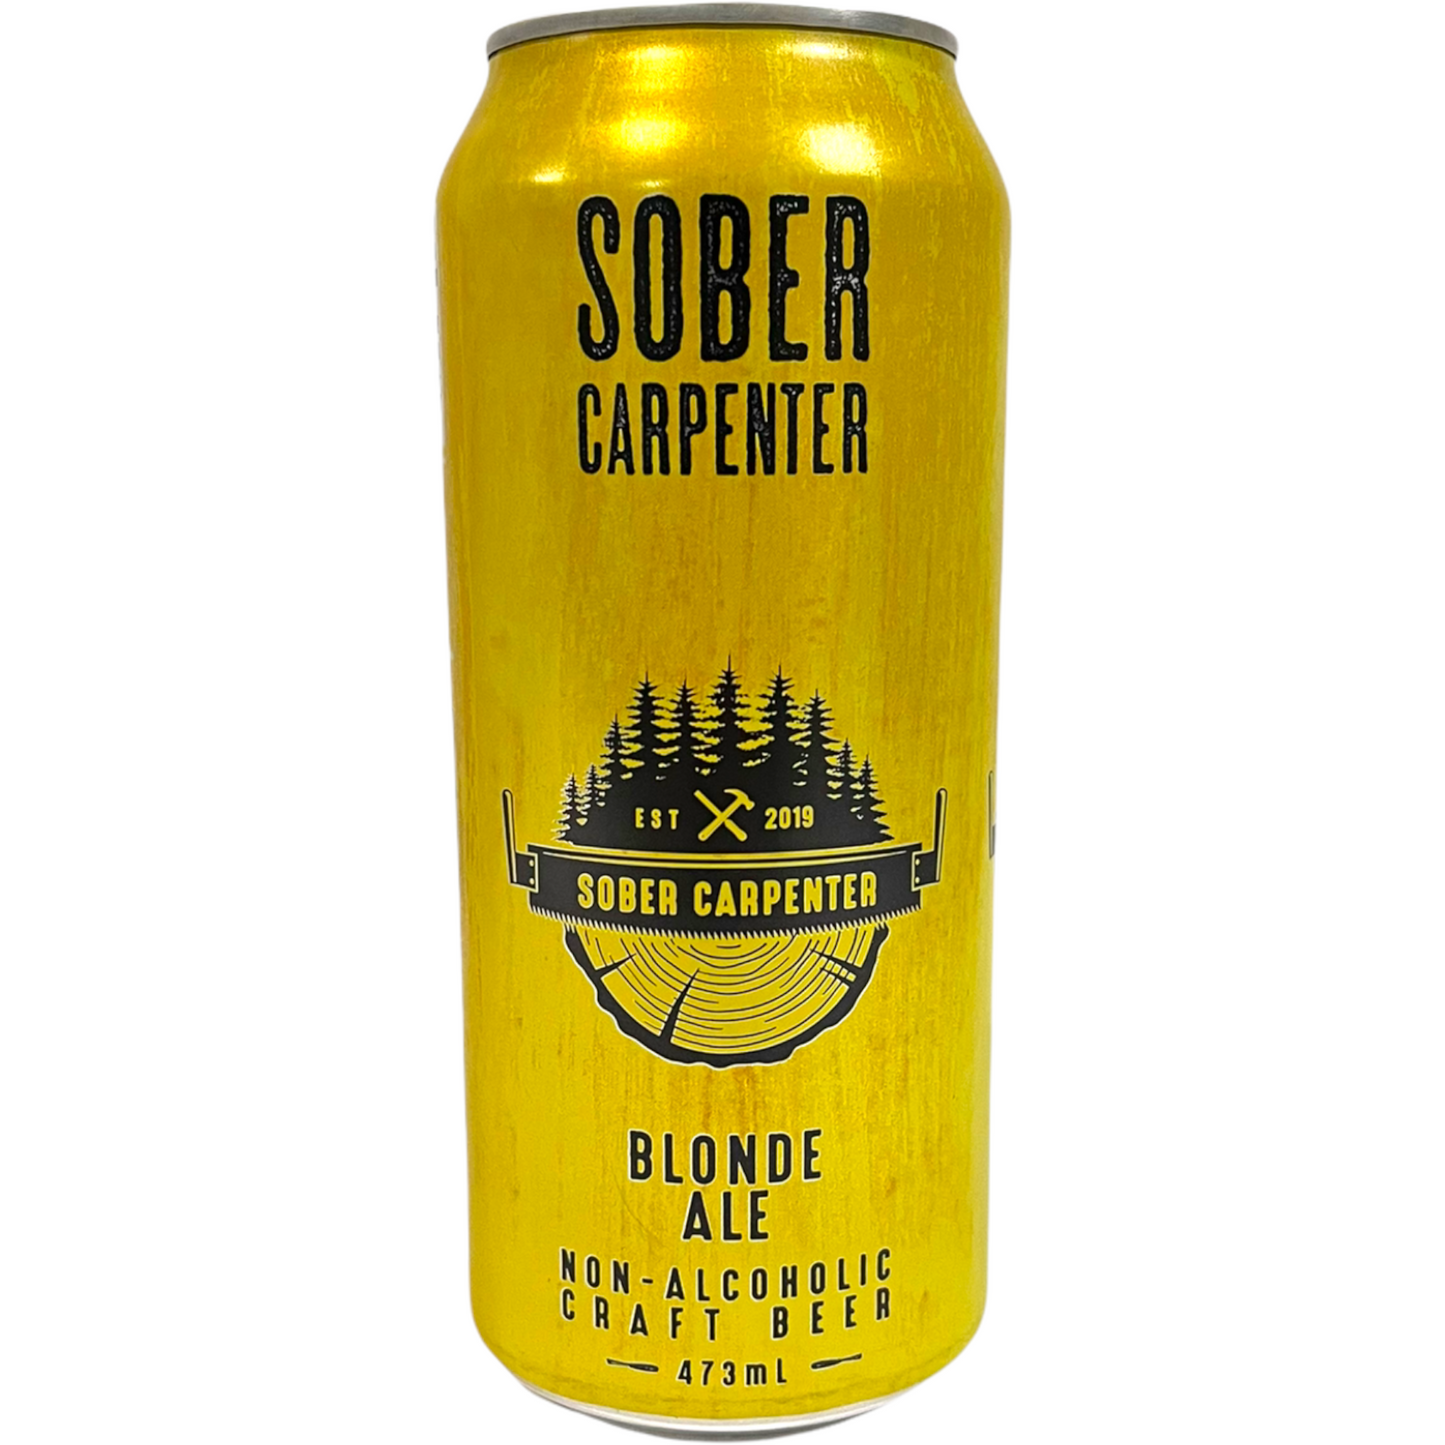 SOBER CARPENTER BLONDE ALE CRAFT BEER NON-ALCOHOLIC